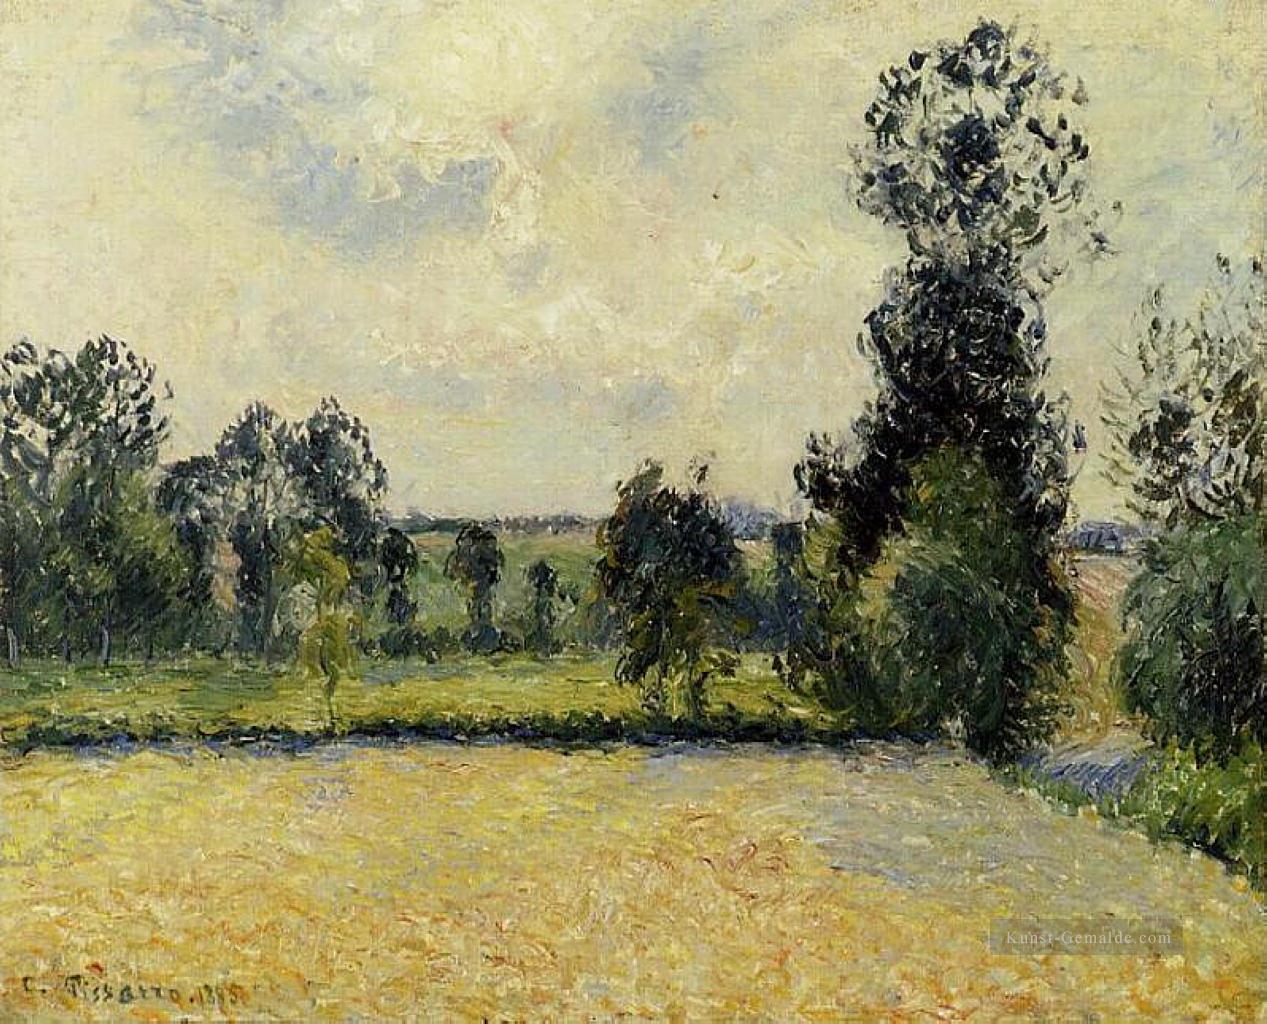 Feld von Hafer in eragny 1885 Camille Pissarro Szenerie Ölgemälde